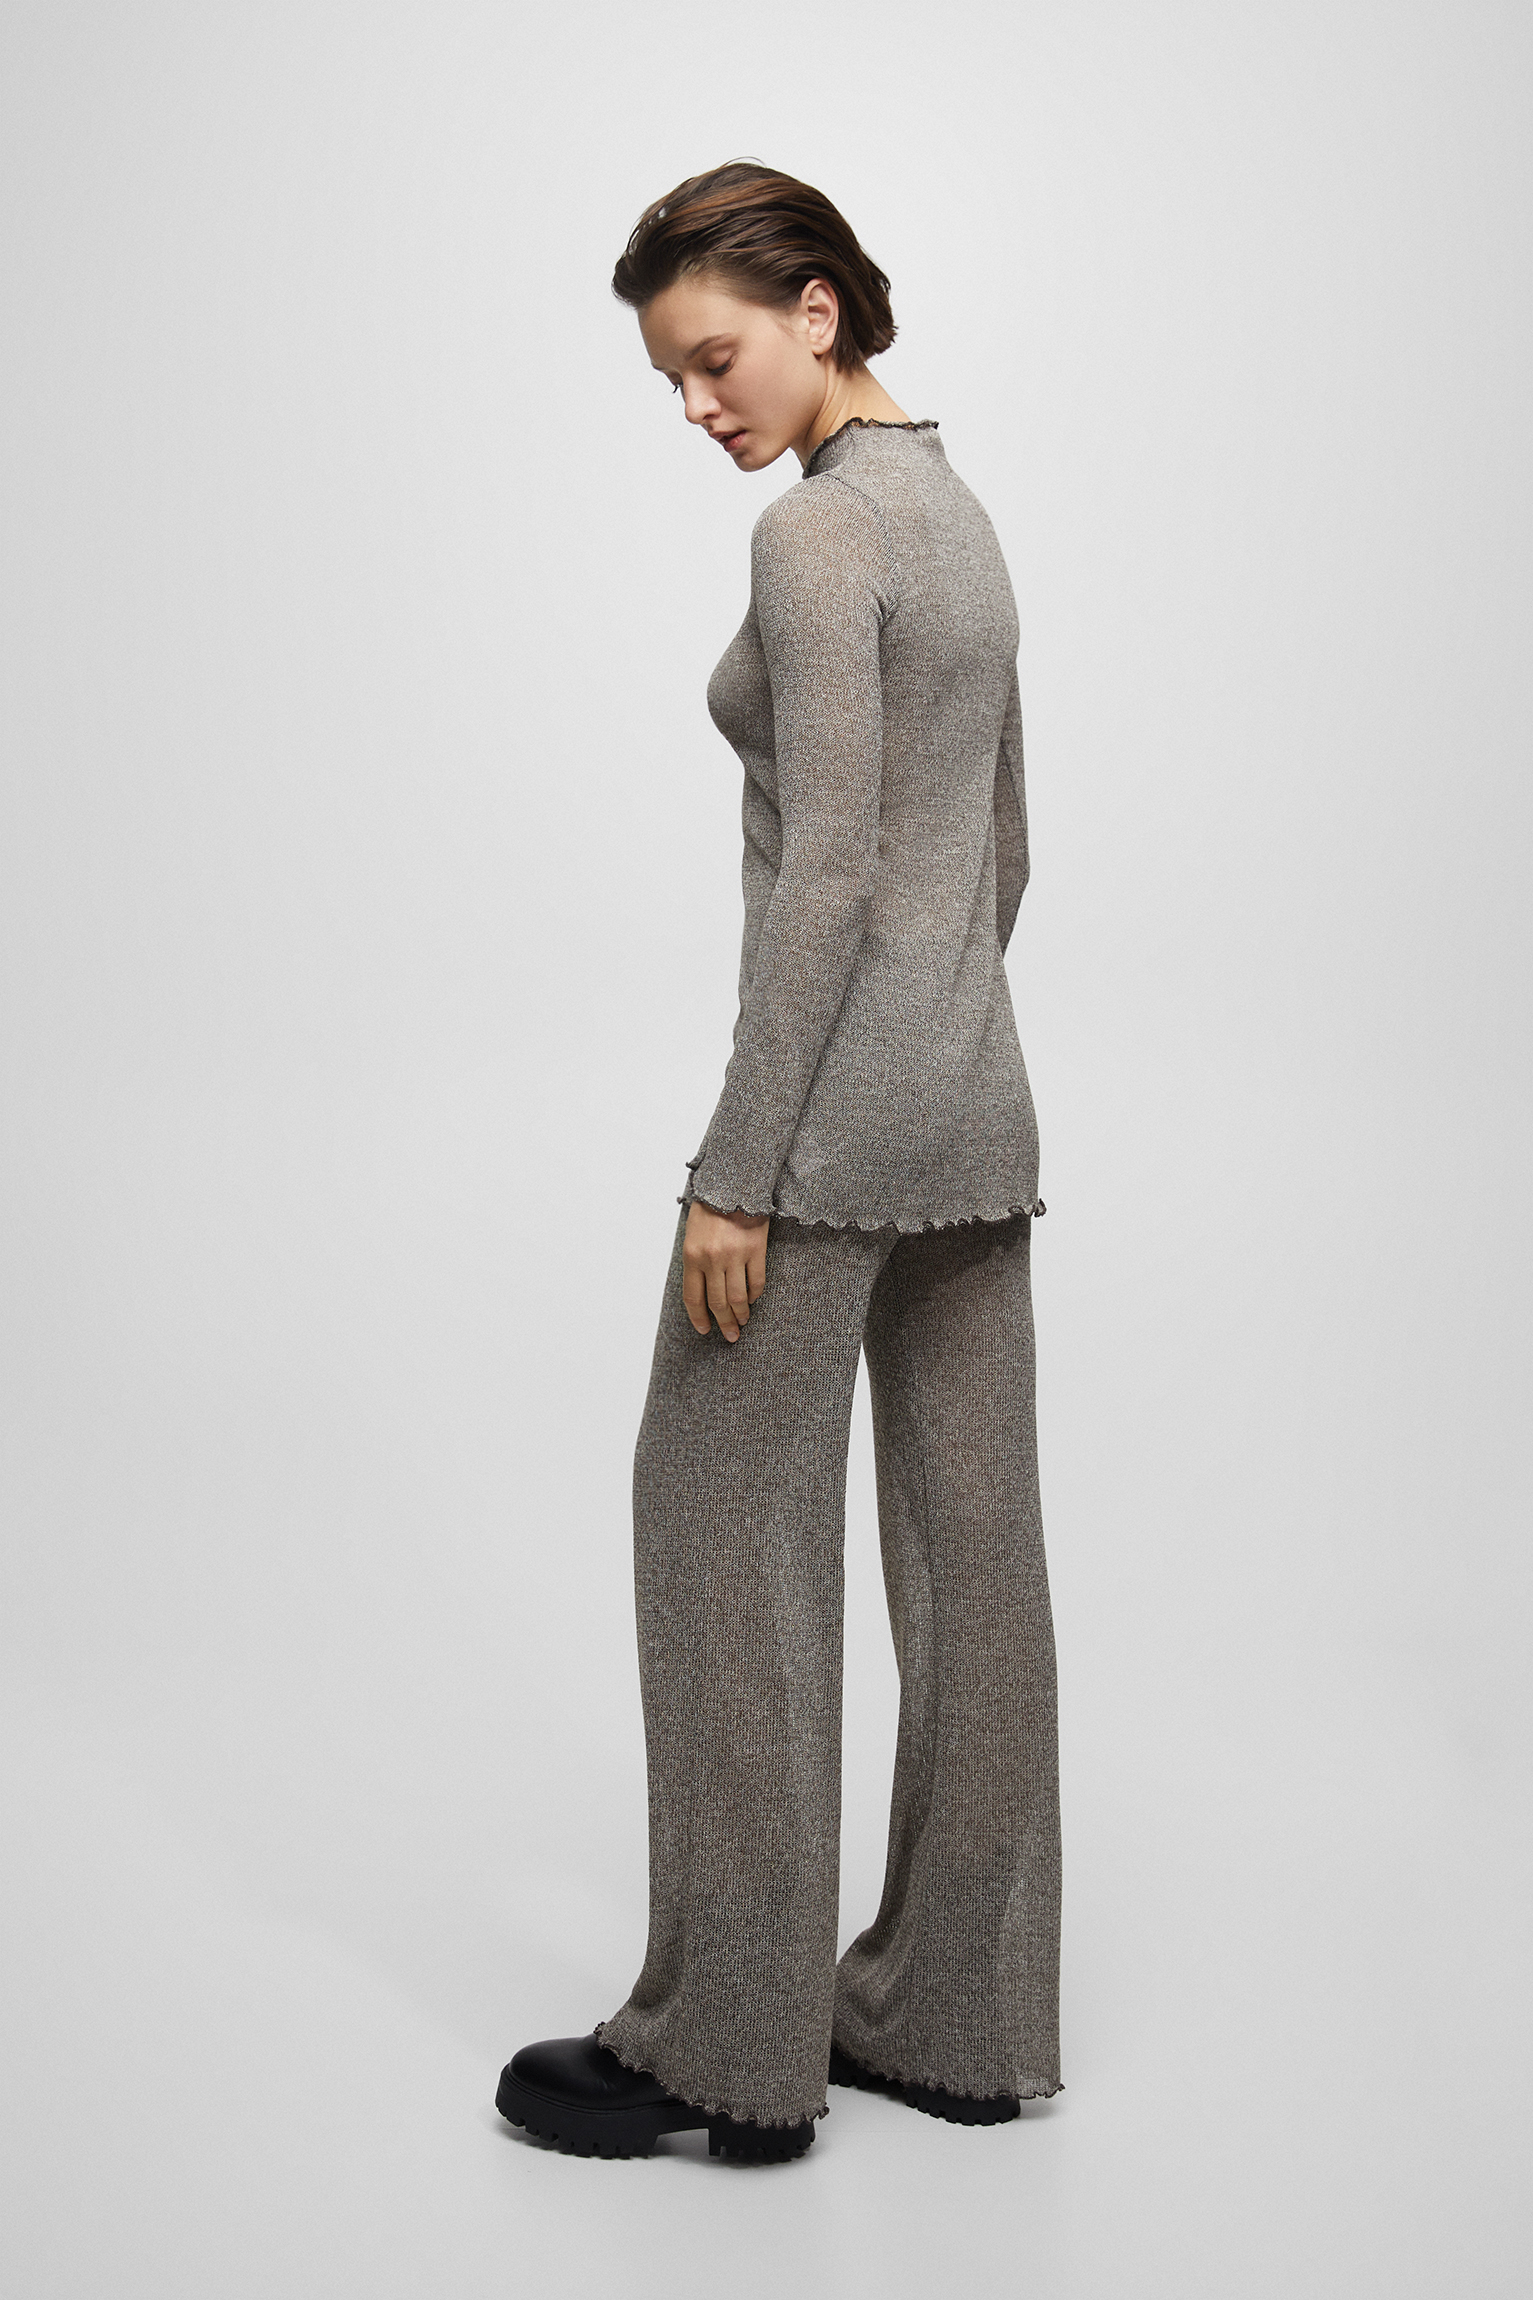 Buy YSJ Womens Knitted Wide Leg Long Pants Winter Warm Sweater Trousers  S Gray at Amazonin